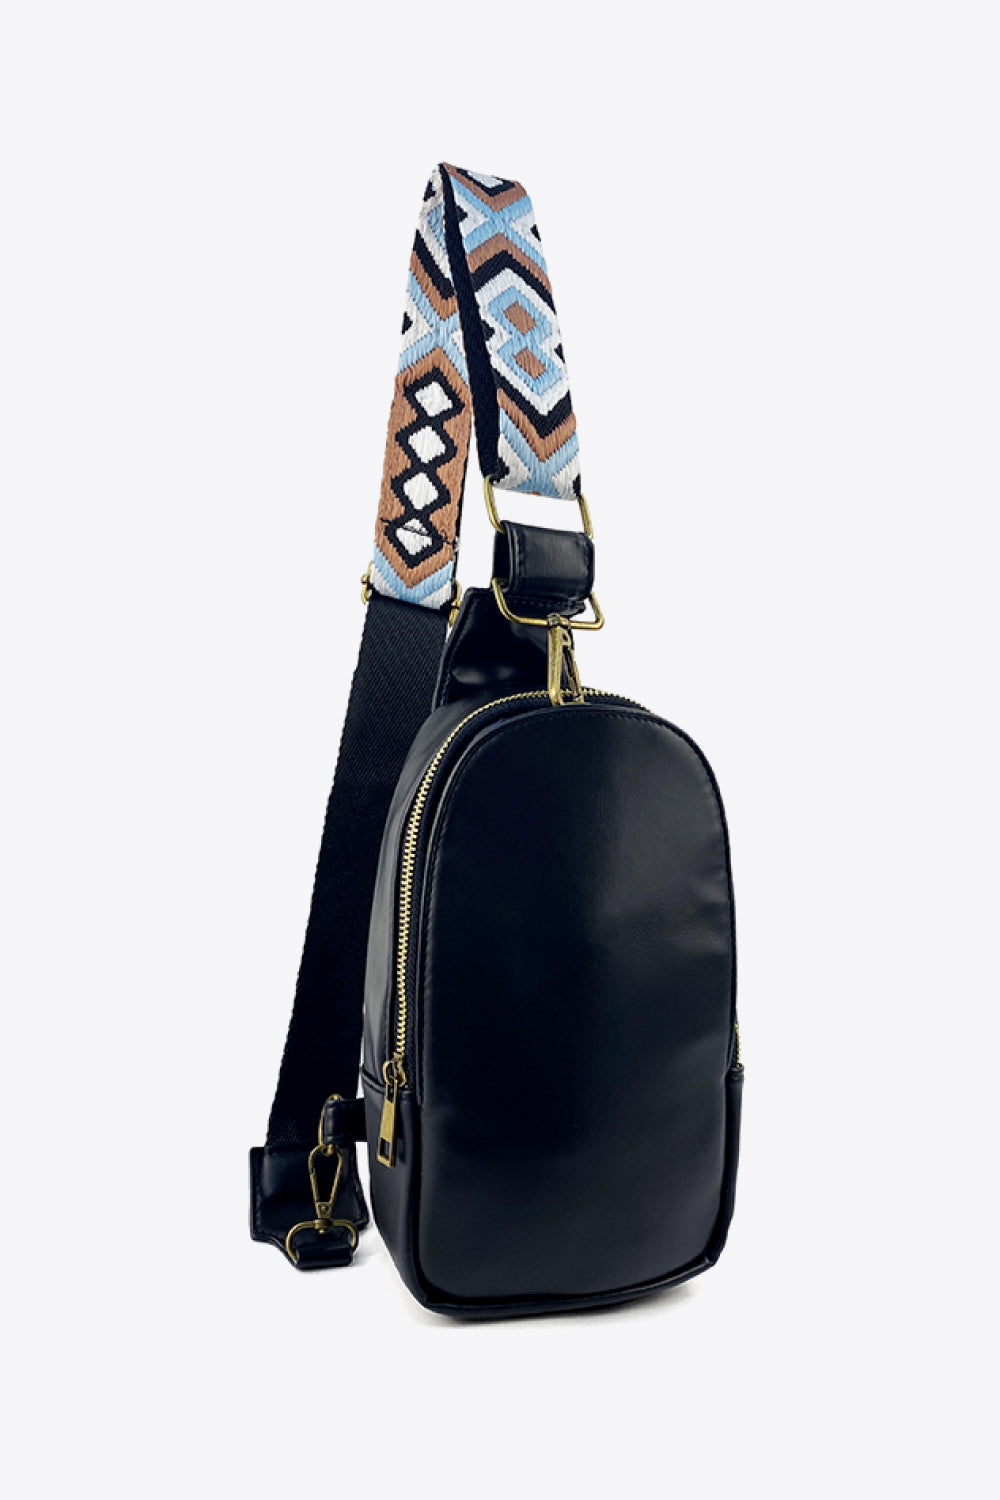 Adjustable Strap PU Leather Sling Bag COCO CRESS